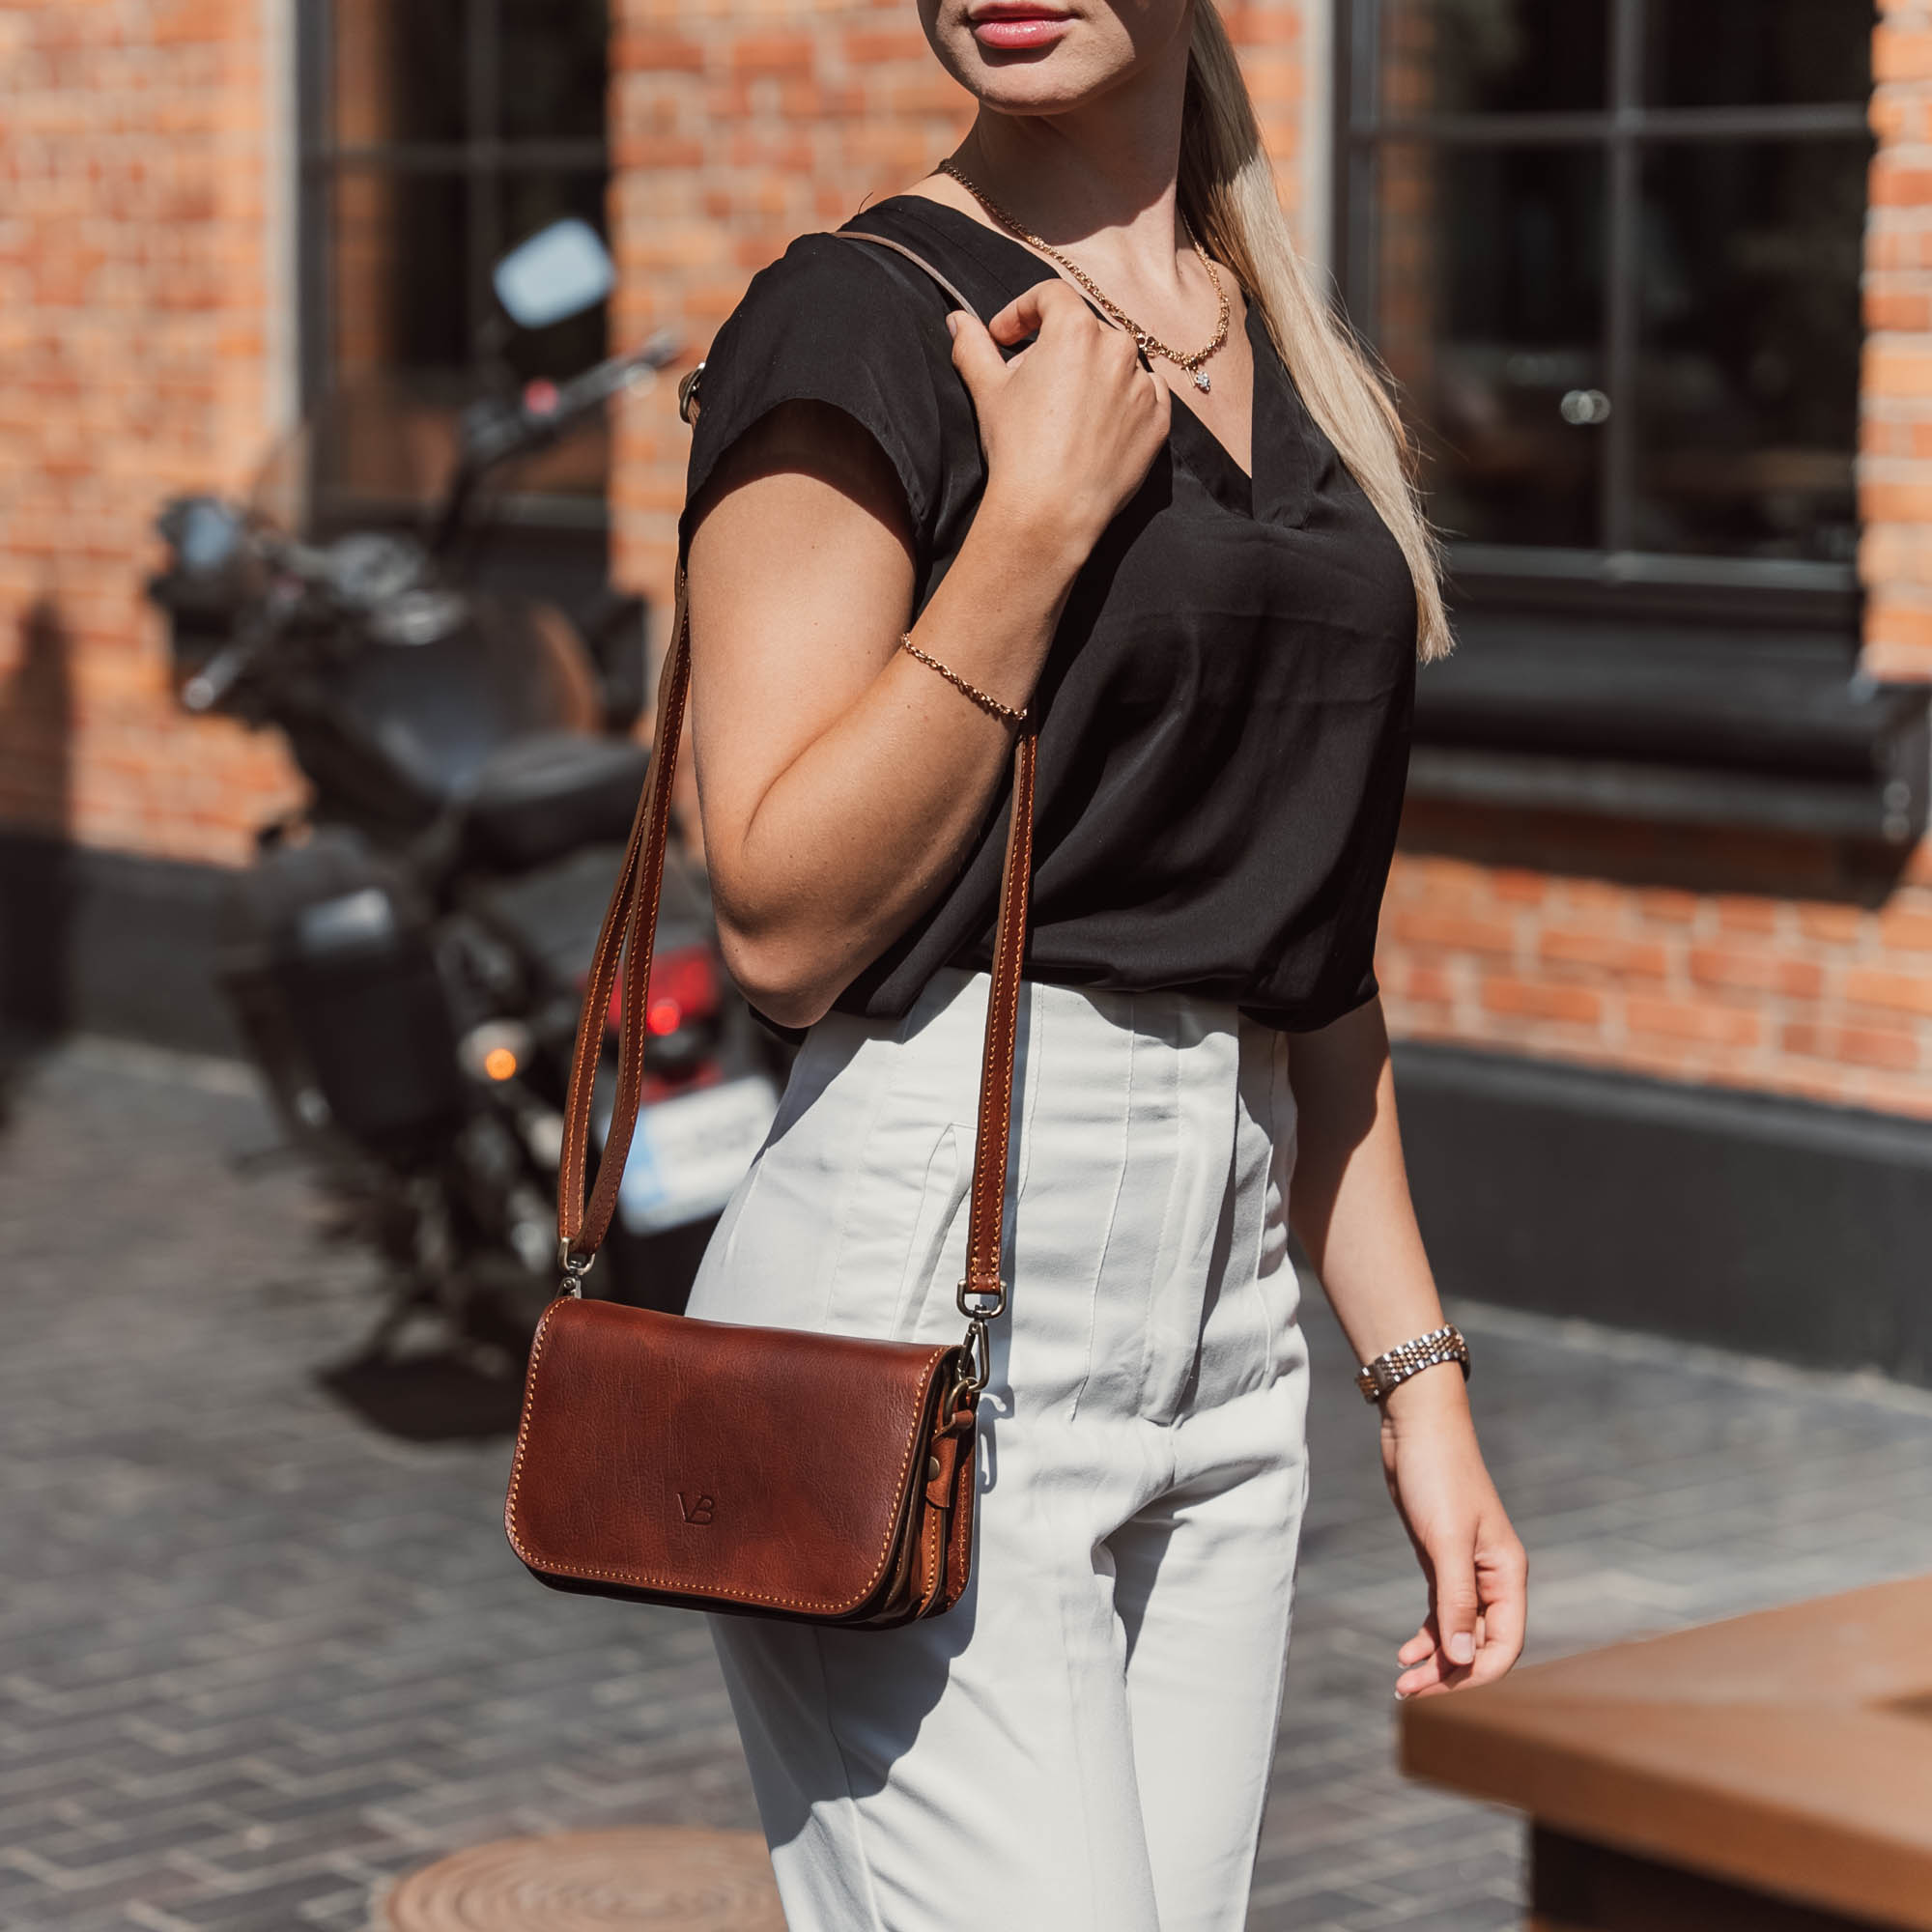 Shoulder bag – How to choose a good-looking bag